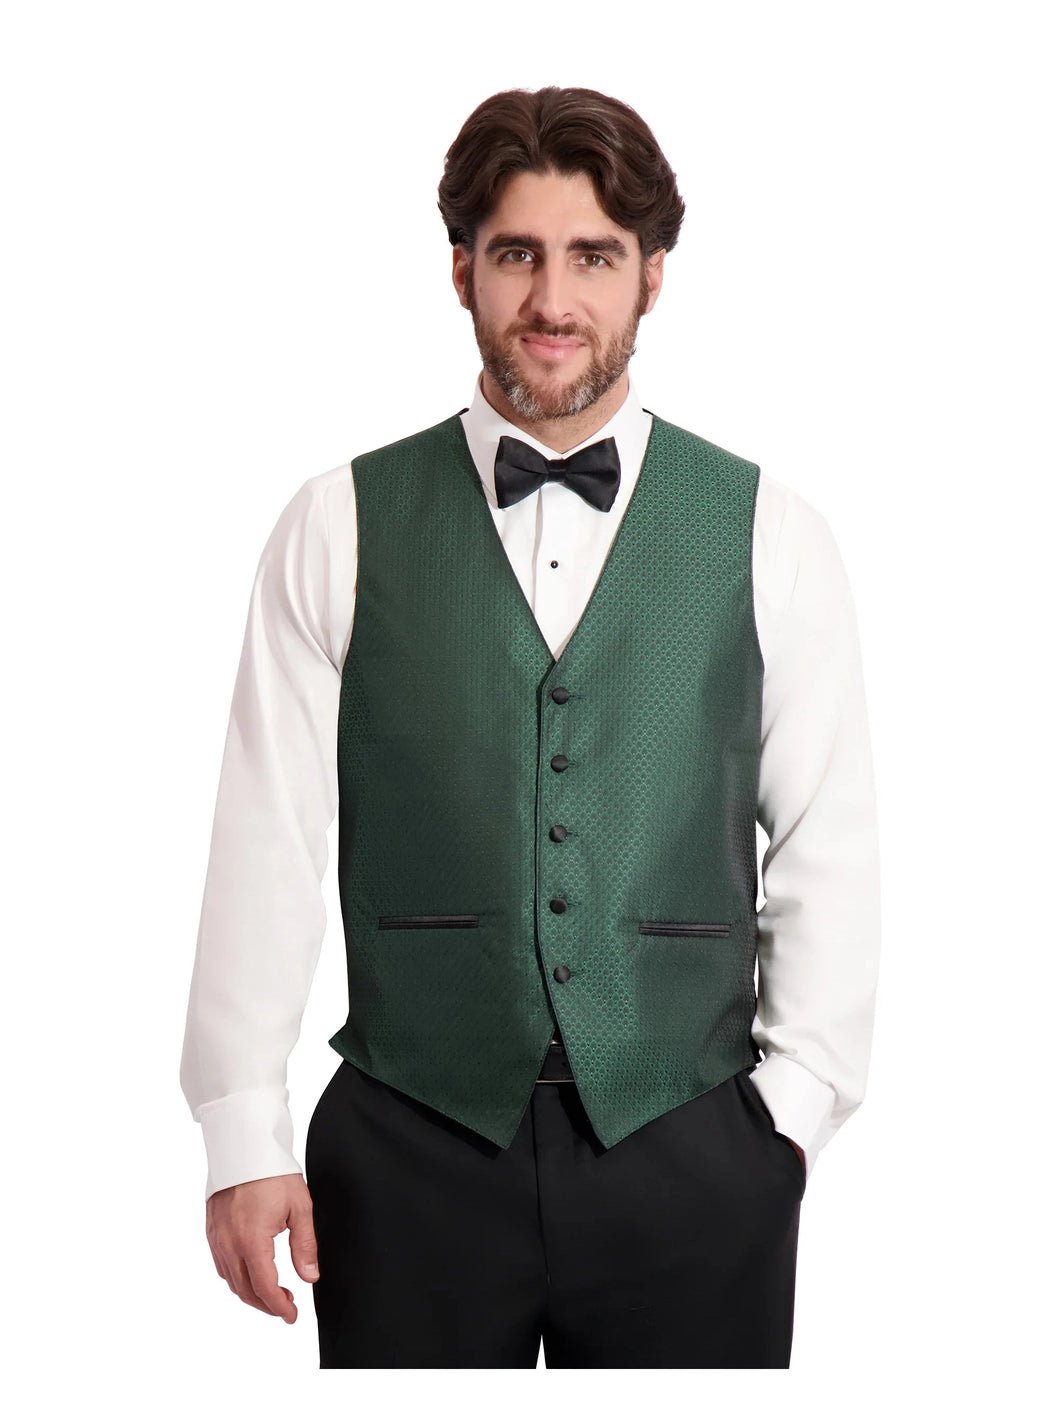 Jacquard Tuxedo Vest (#146V) - Hunter Green and Tie Set